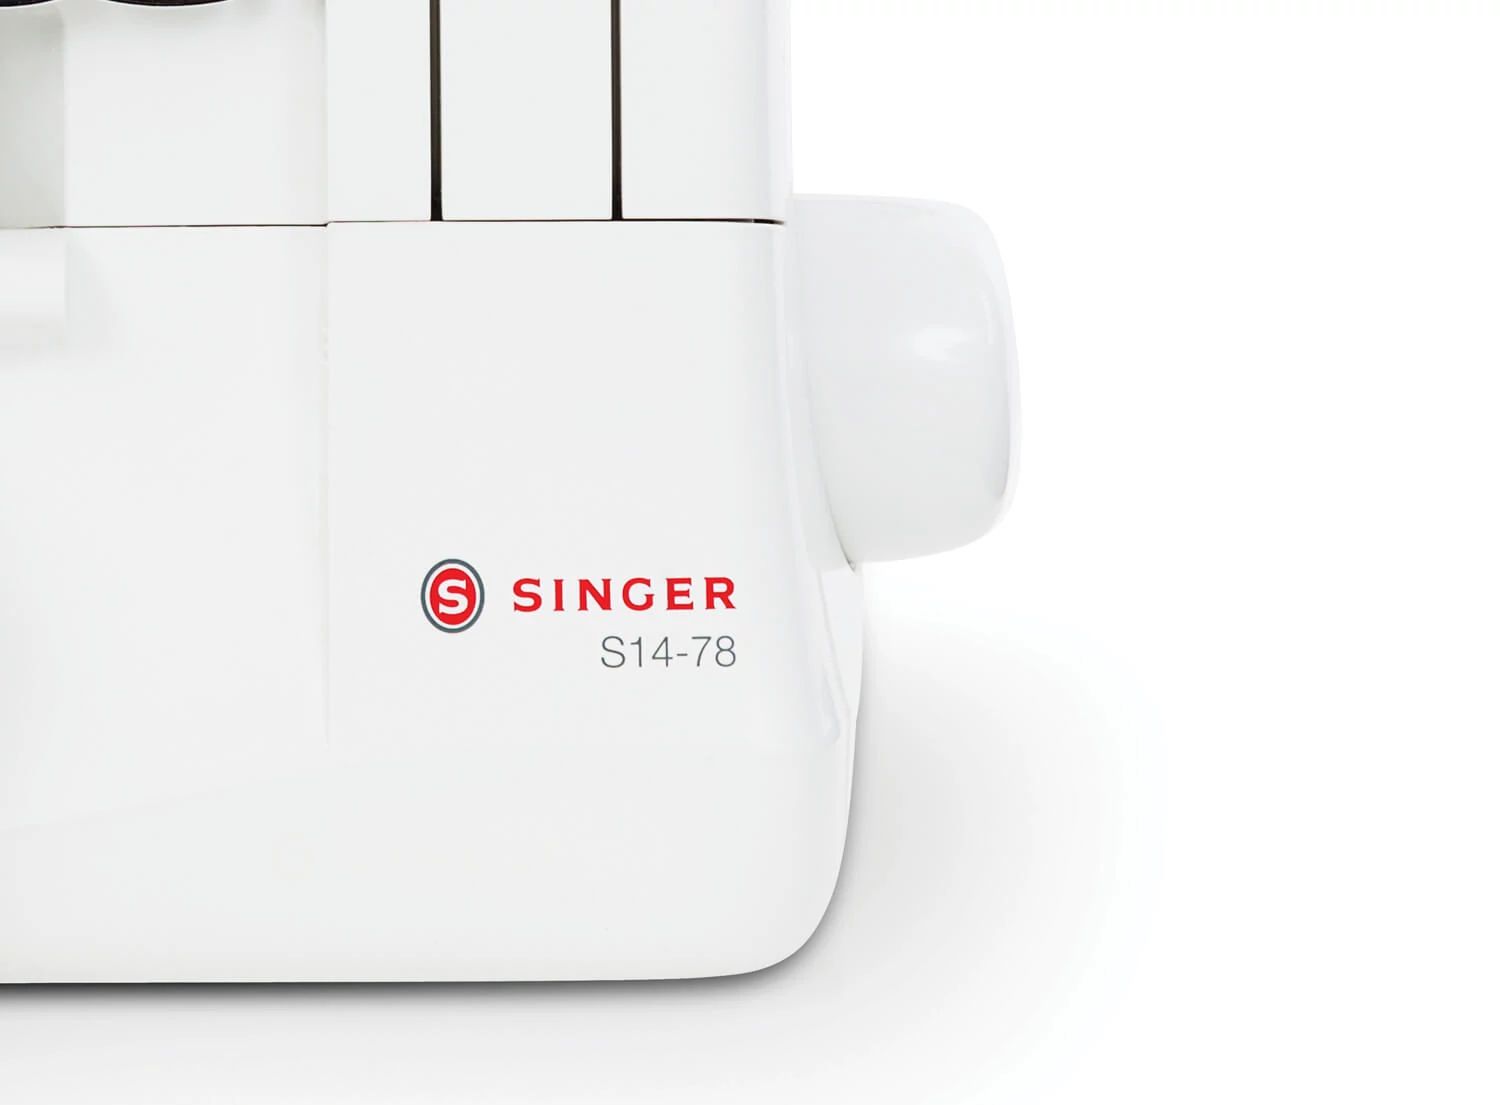  SINGER S14-78 Serger : Arte y Manualidades